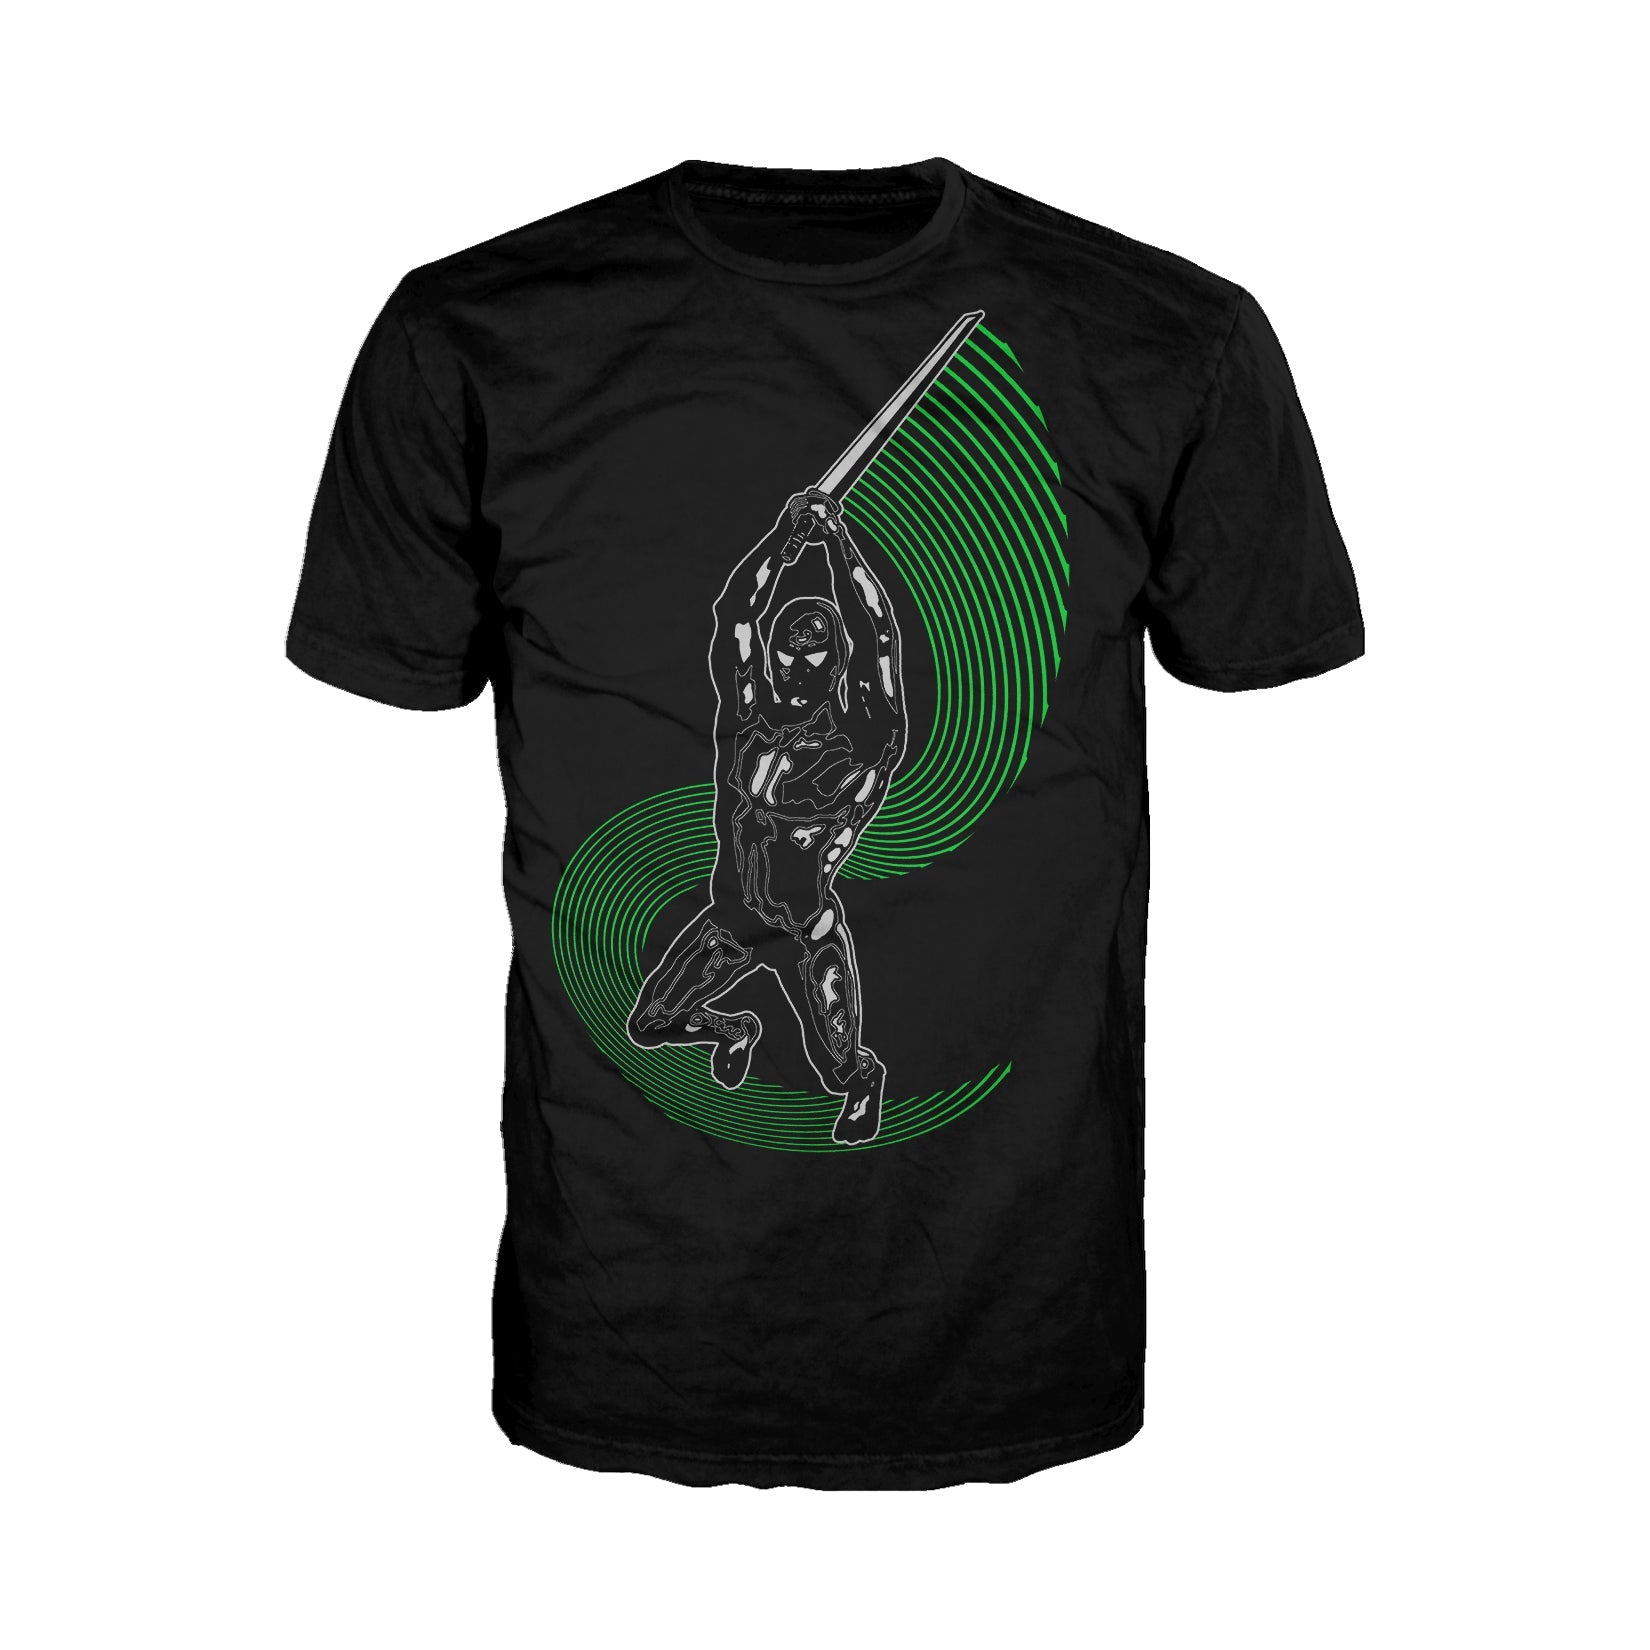 US Brand X Future Retro Urban Ninja Official Men's T-shirt ()